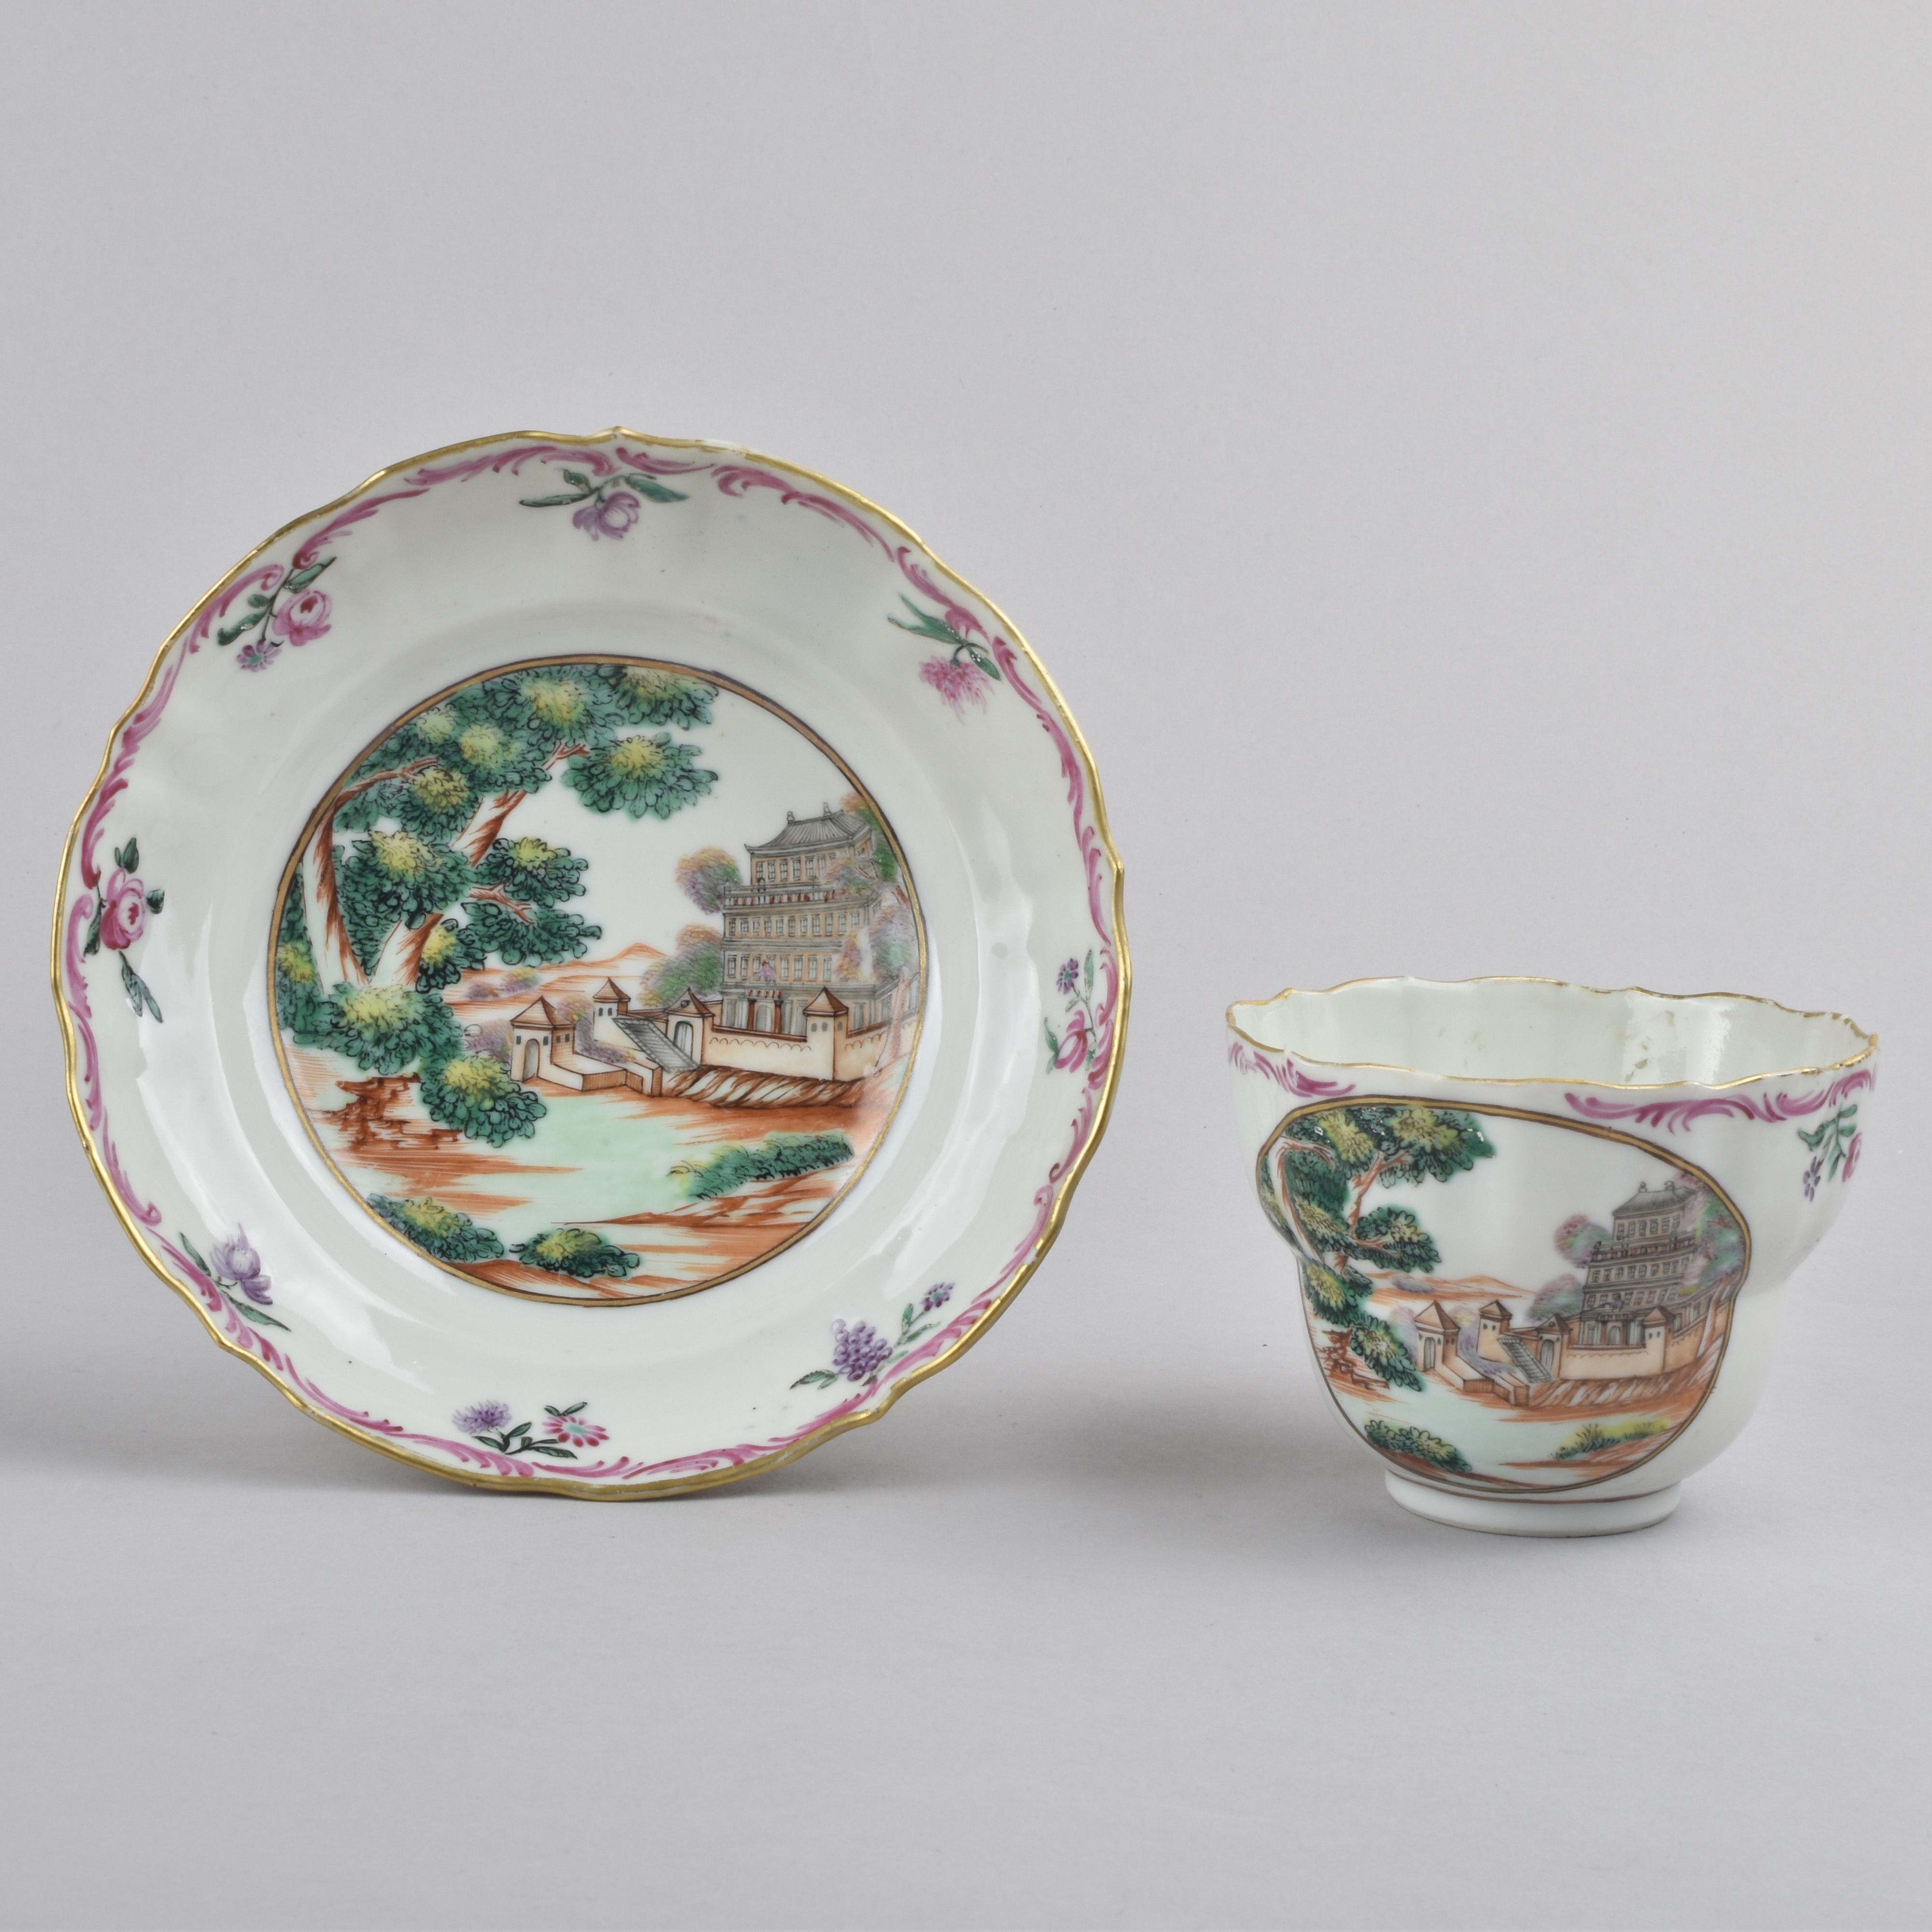 Porcelaine Qianlong (1735-1795), circa 1780, Chine